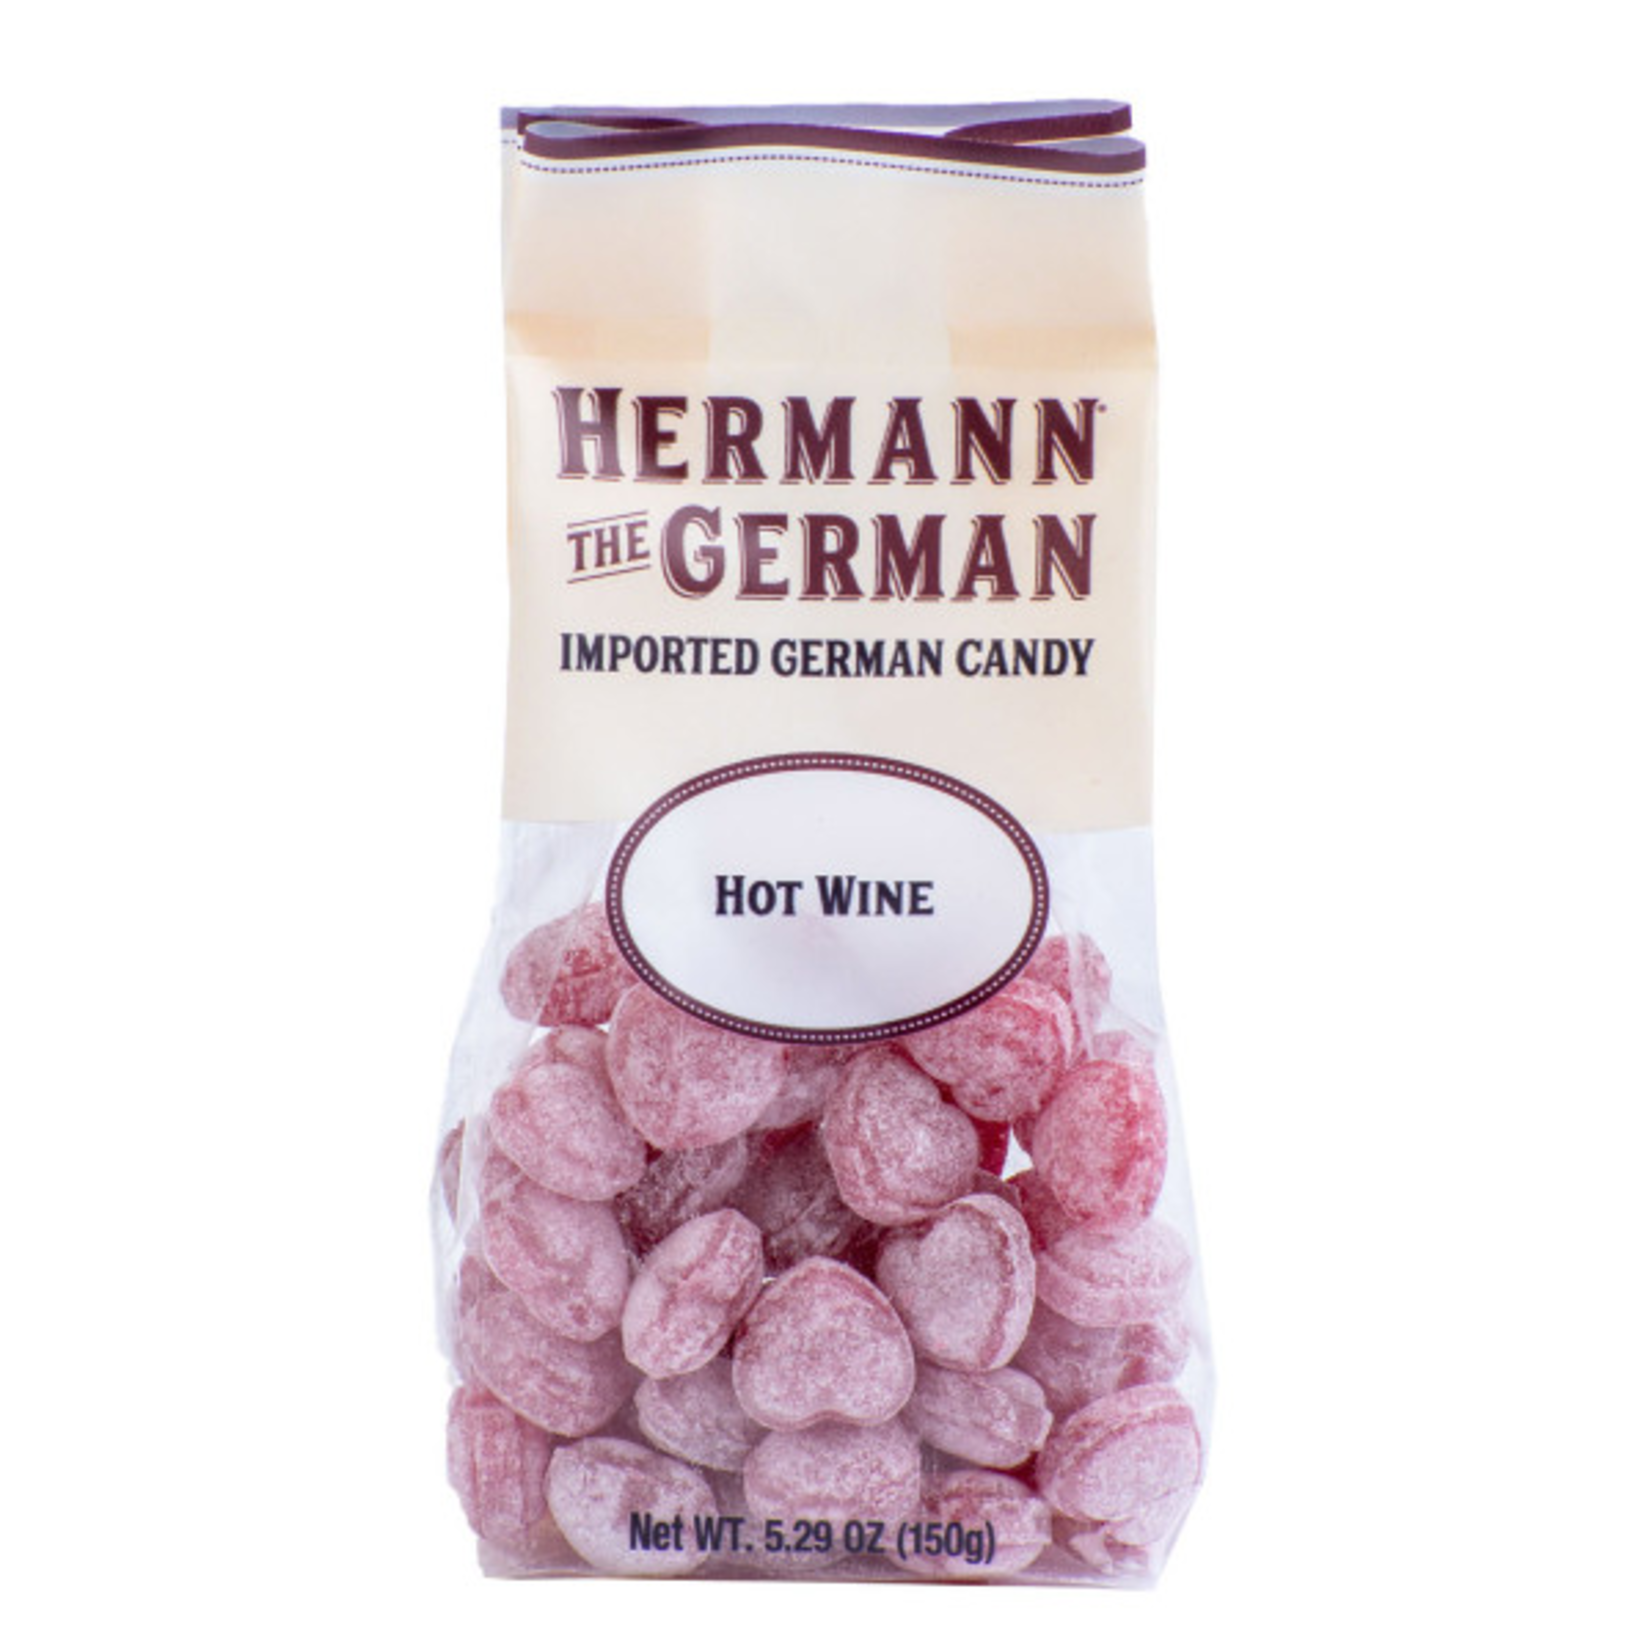 Hermann the German Hermann the German Hot Wine Candy